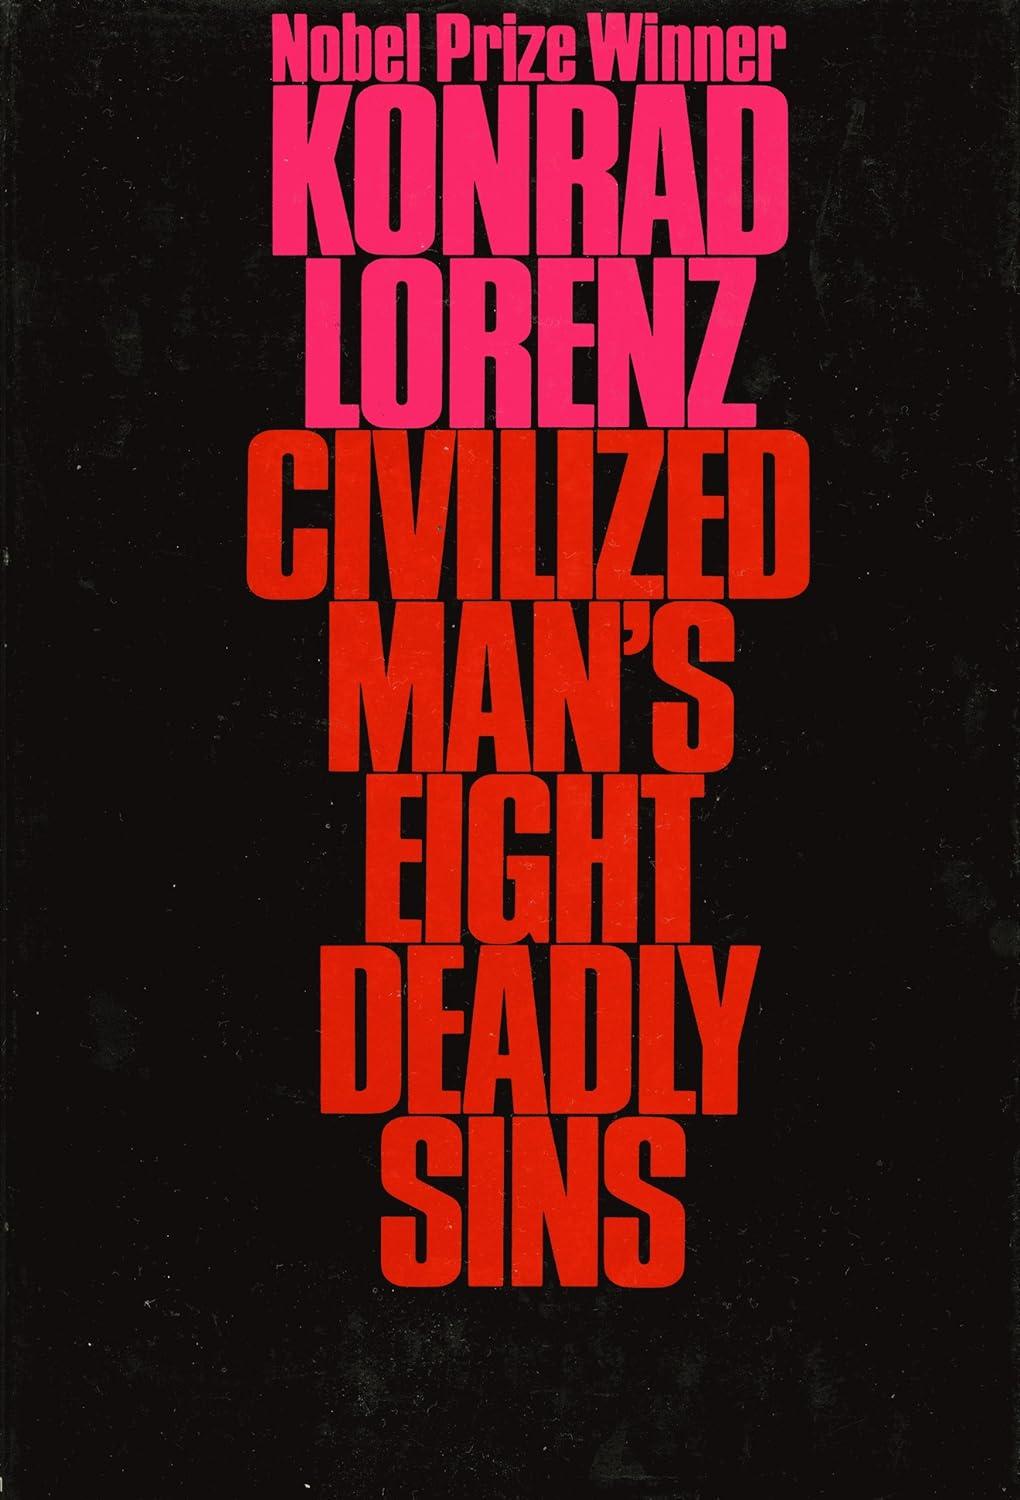 l-k-lorenz-konrad-civilized-man-s-eight-deadly-sin-1.jpg